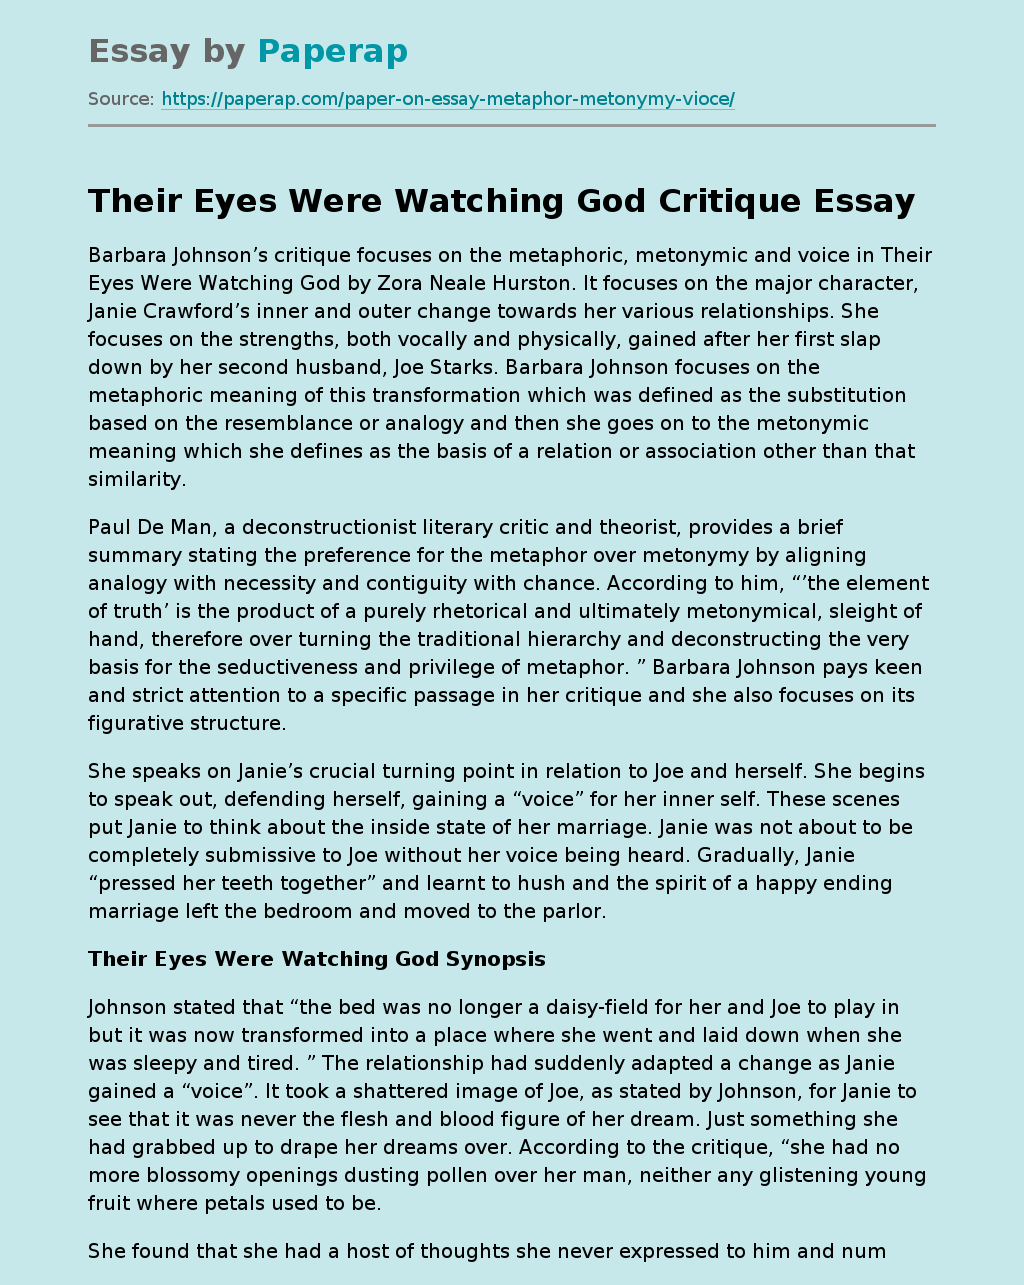 Their Eyes Were Watching God Critique